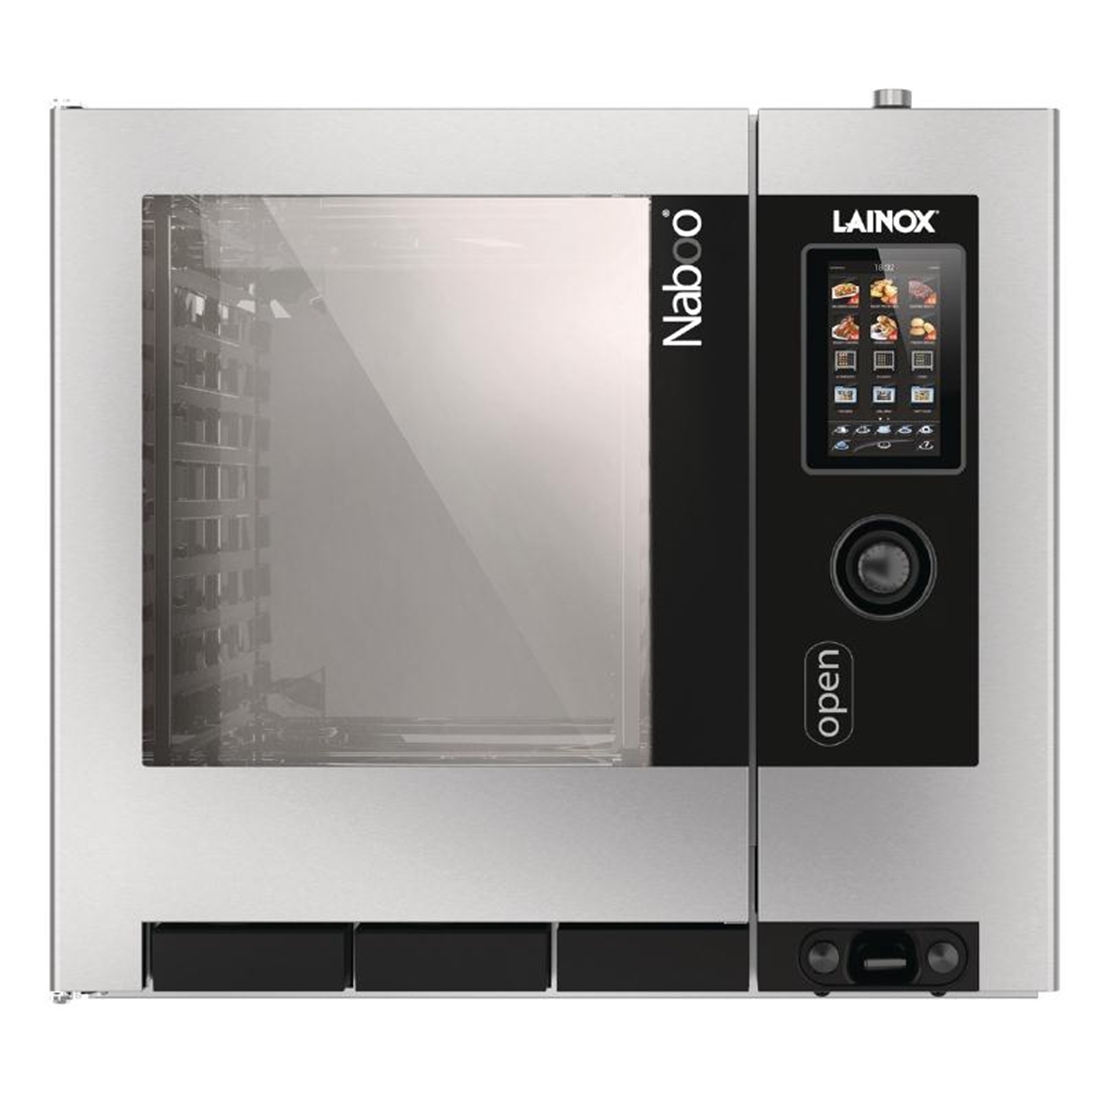 Lainox Naboo 10 Grid Combi Oven NAEB102